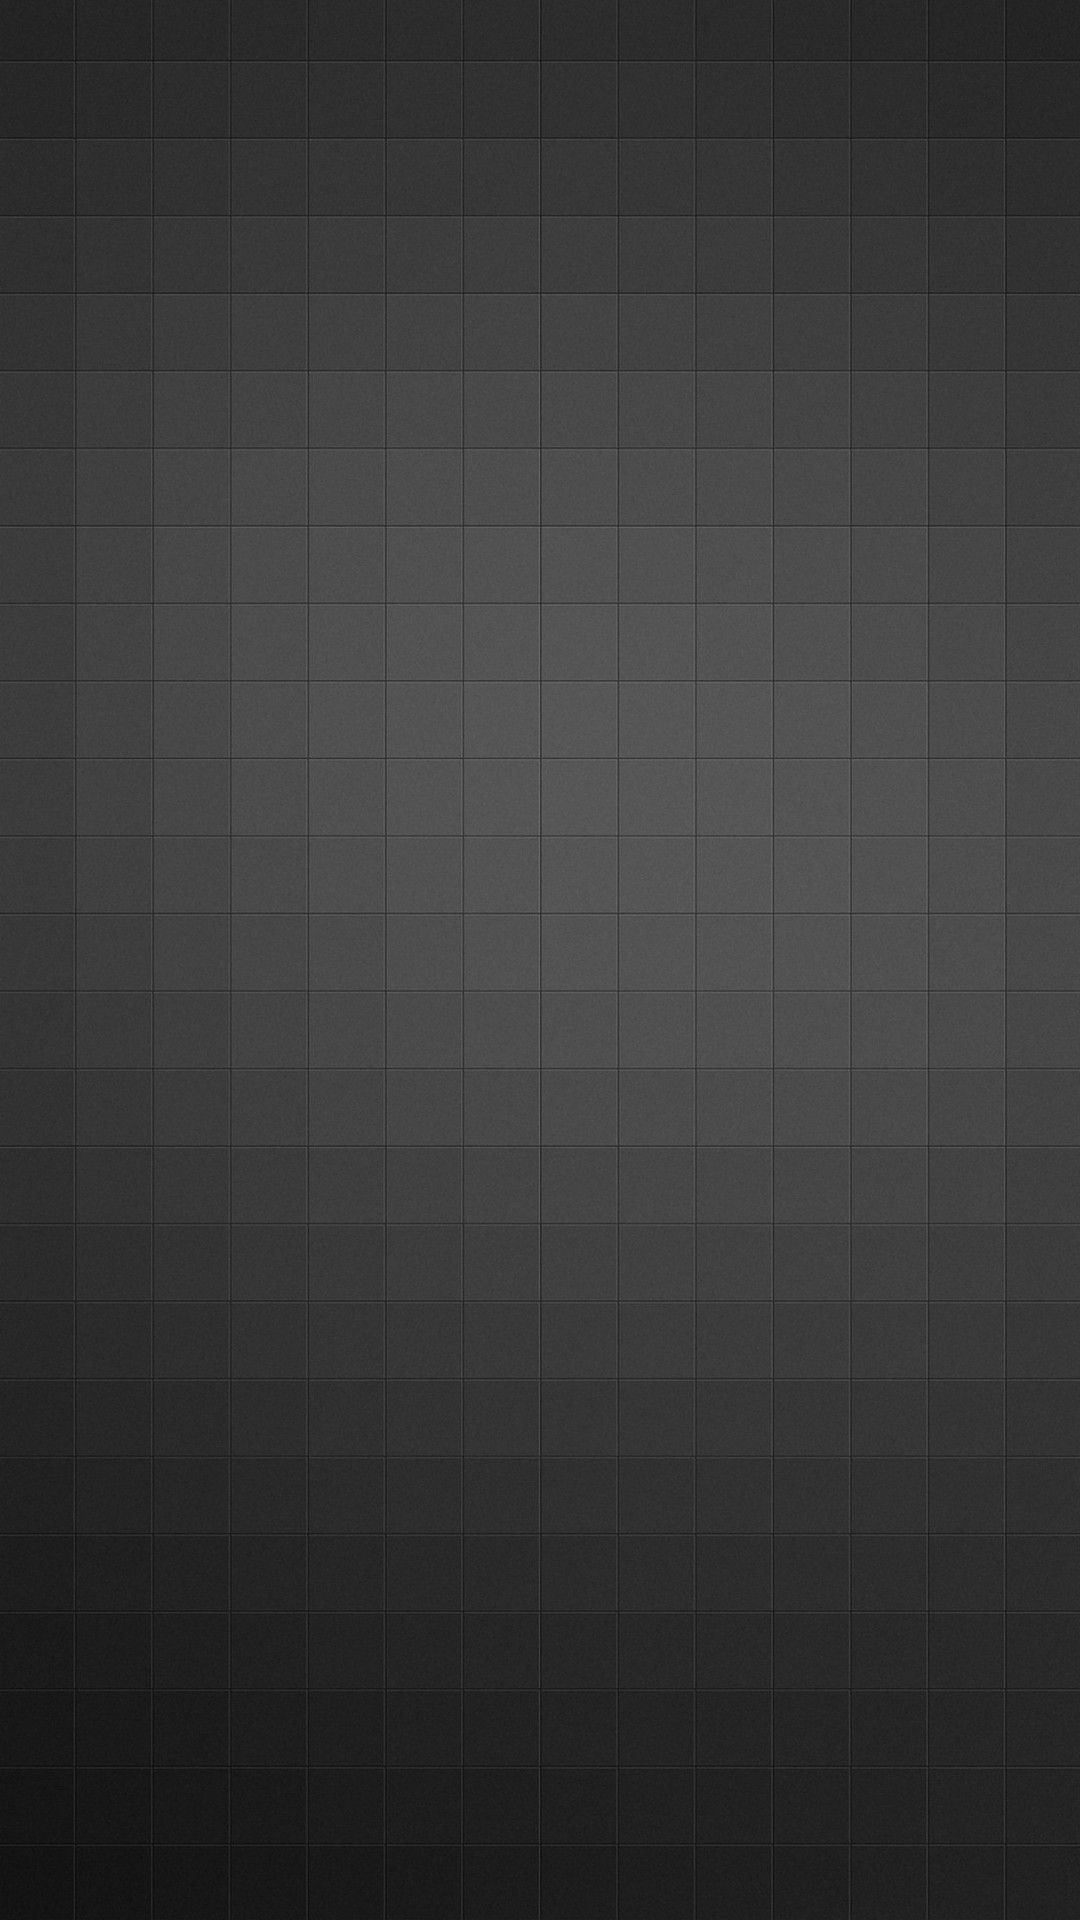 Iphone Grey Wallpapers